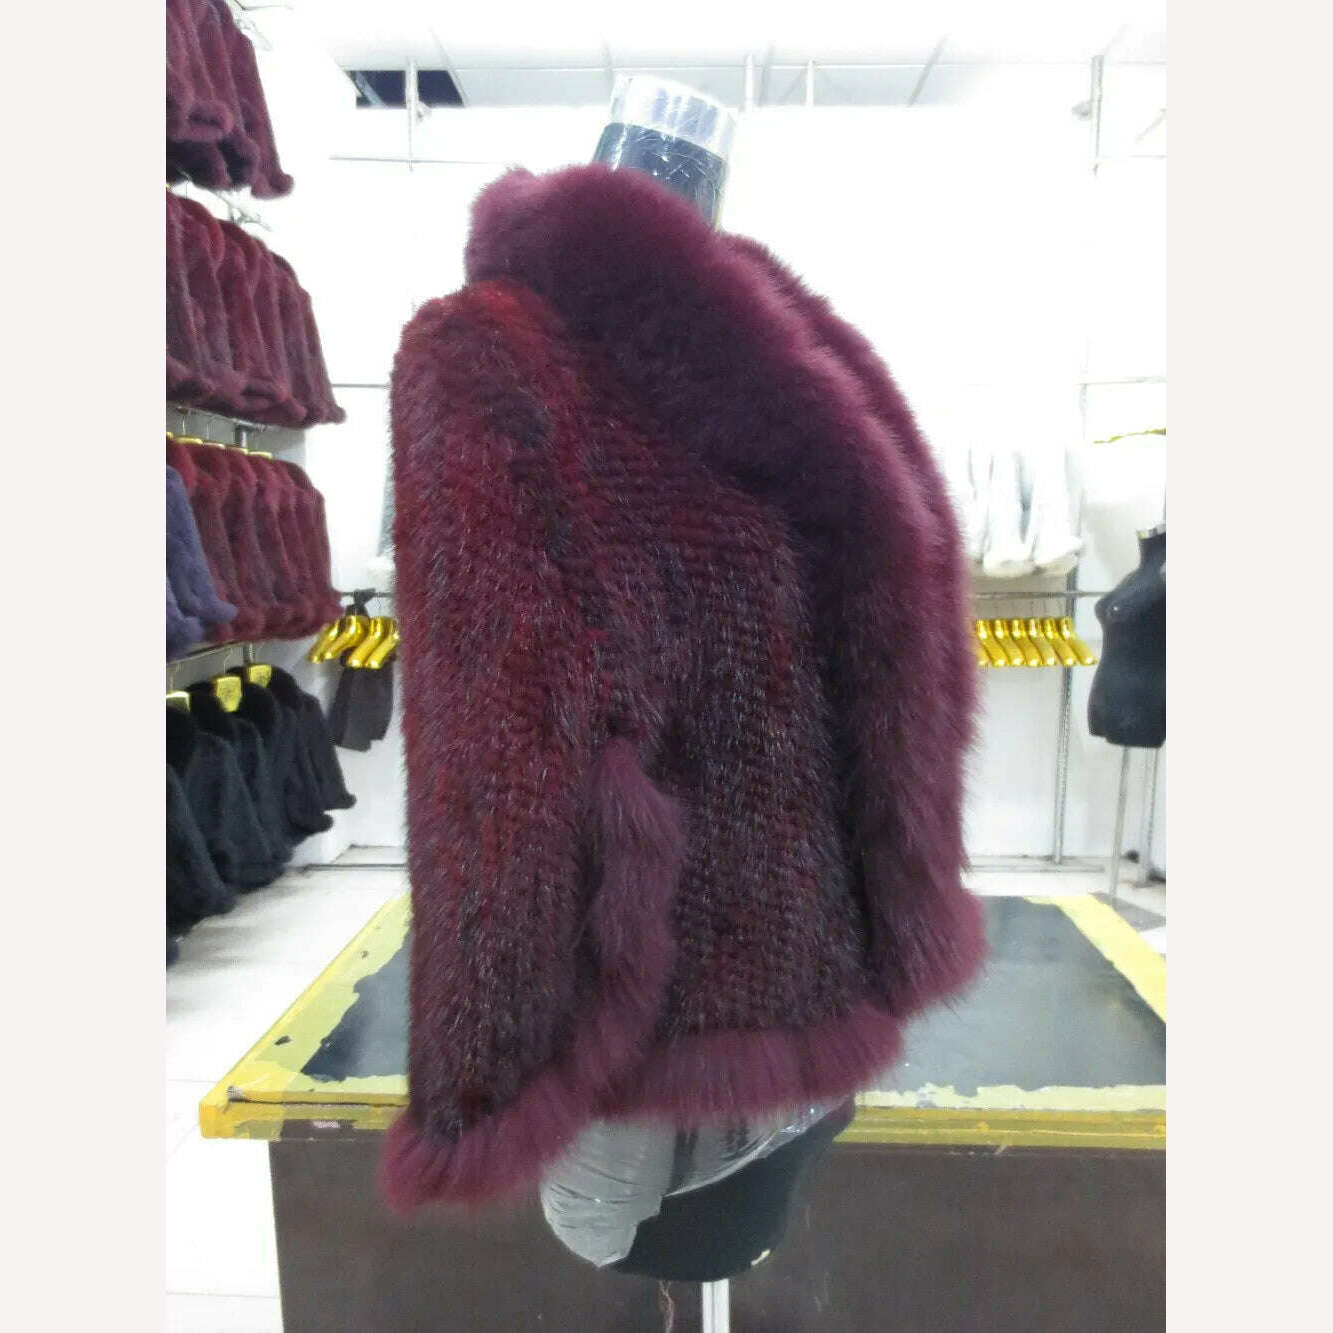 KIMLUD, Autumn Winter Ladies' Genuine Knitted Mink Fur Shawls Fox Fur Collar Women Fur Pashmina Wraps Bridal Cape Coat Jacket, KIMLUD Womens Clothes